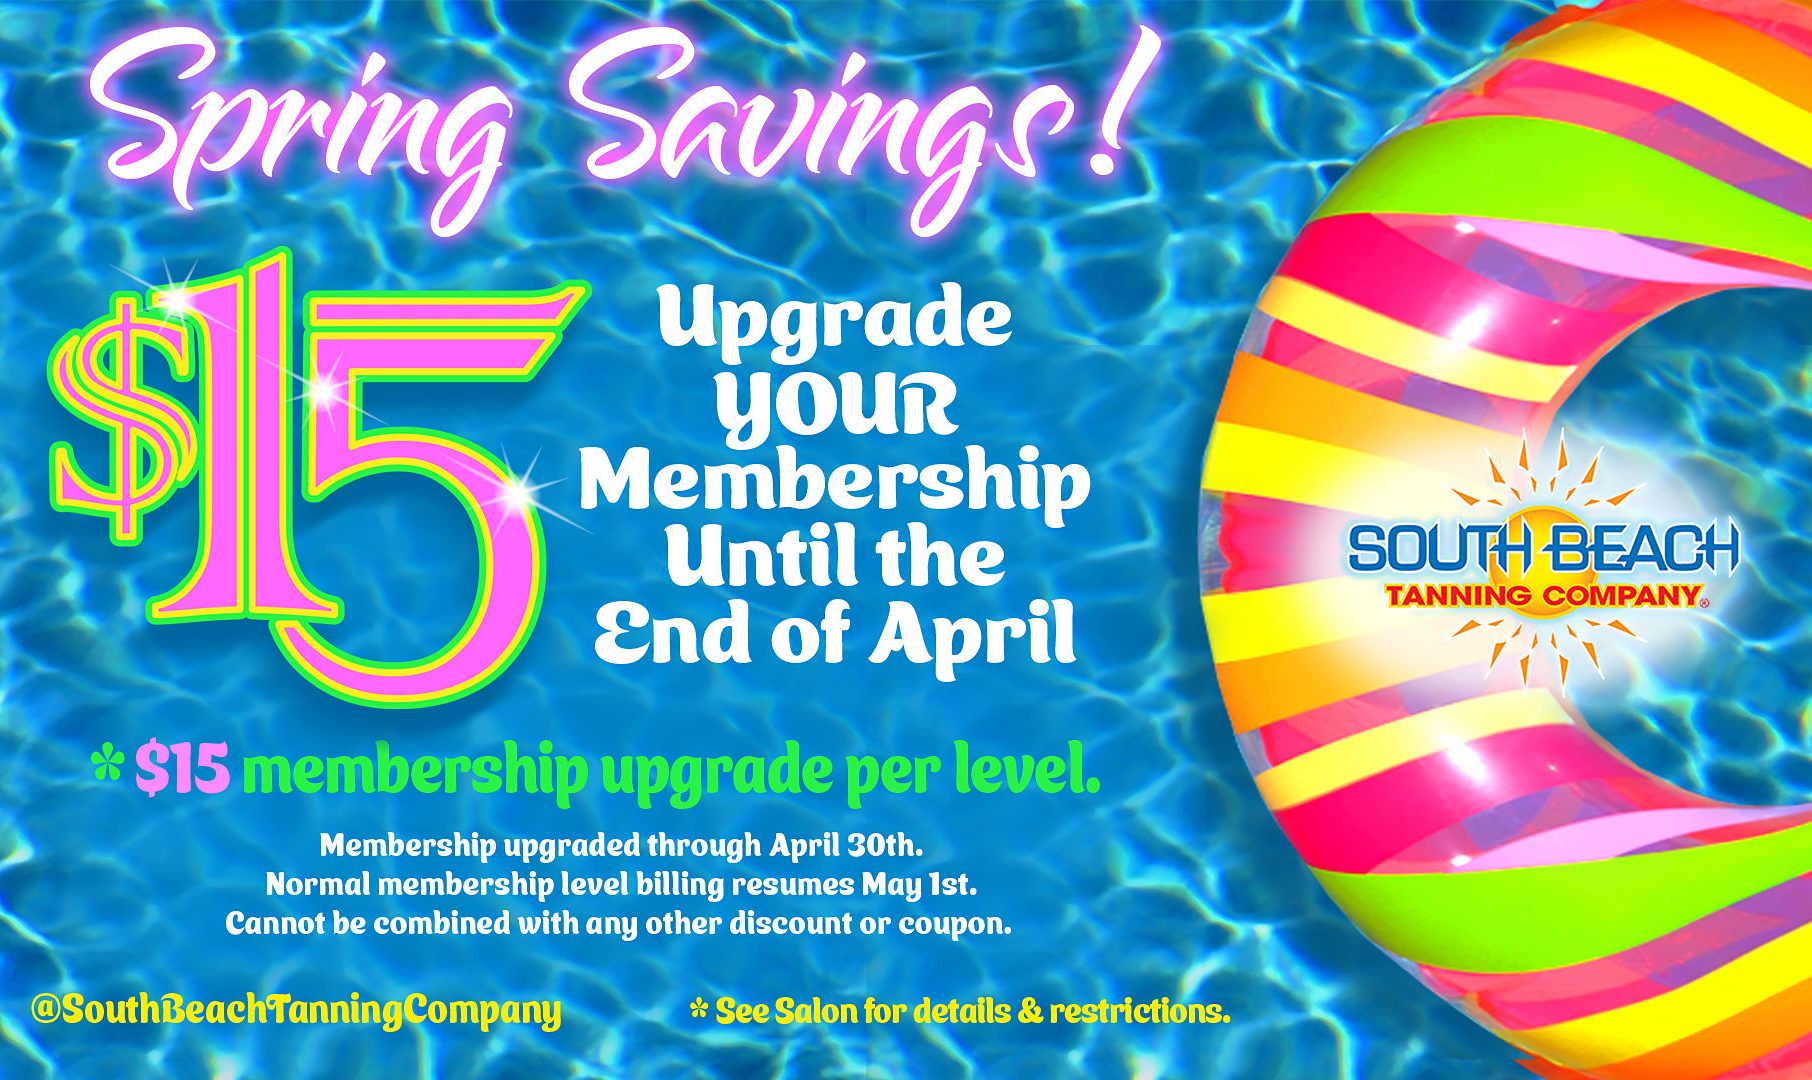 April Promo: Spring Savings! $15 Upgrade Your Membership Until The End Of April!